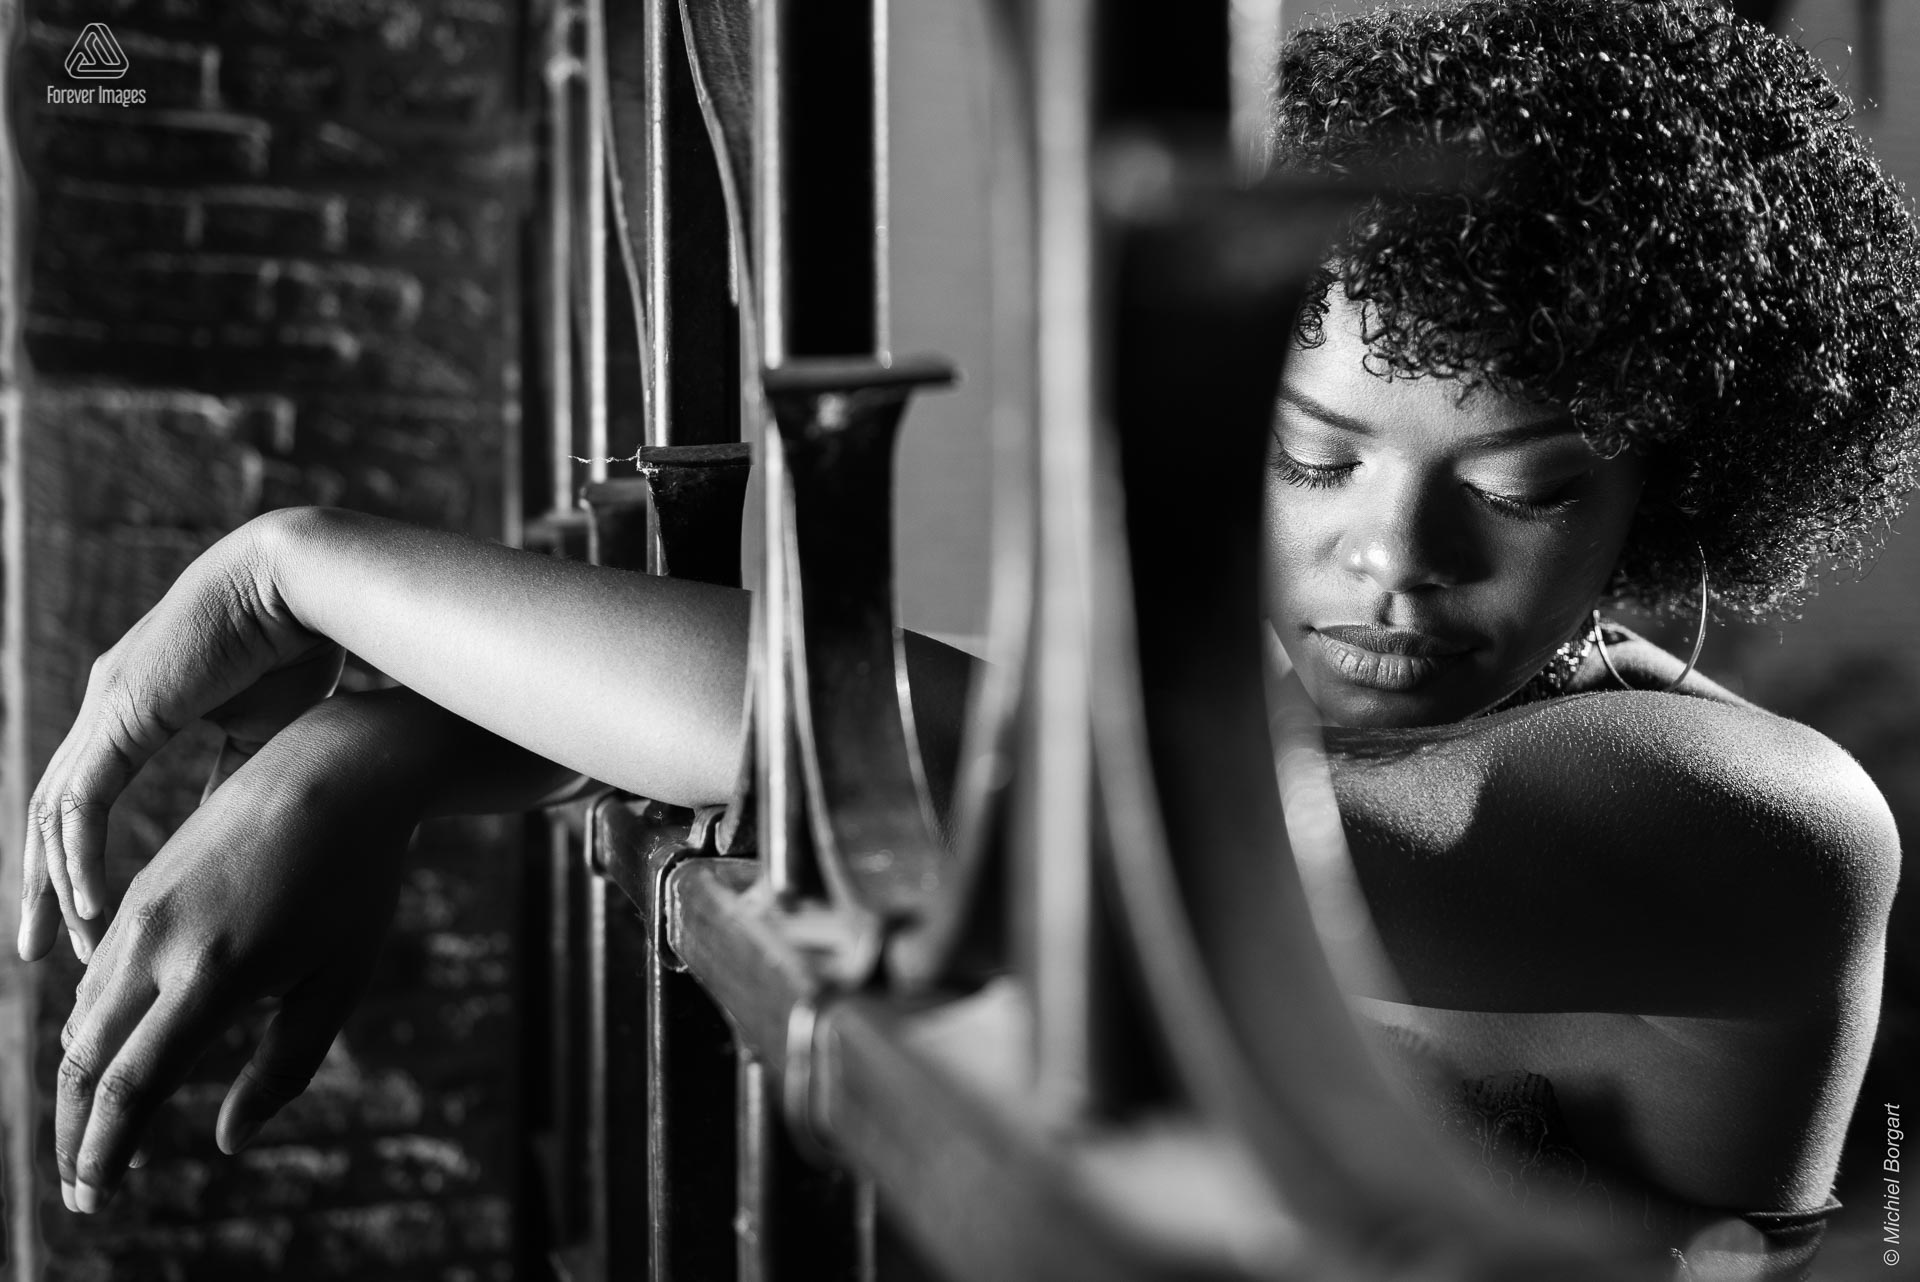 Portretfoto zwart-wit armen door hek | Mariangel Dolorita Haarlem | Portretfotograaf Michiel Borgart - Forever Images.